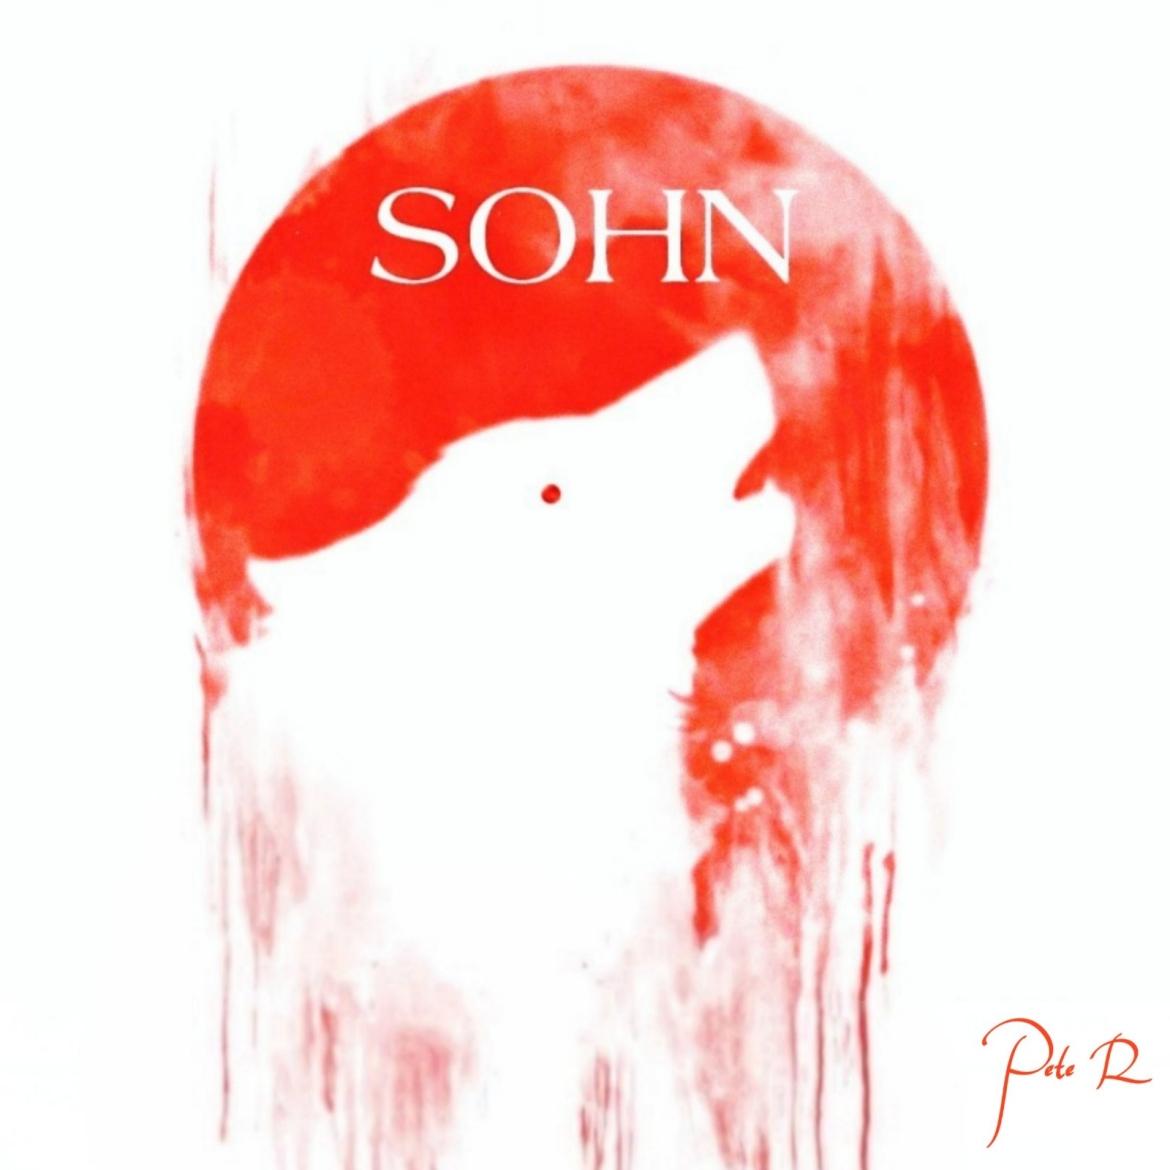 Pete R - Sohn (Letzte Wölfe) (Wolf Cover)